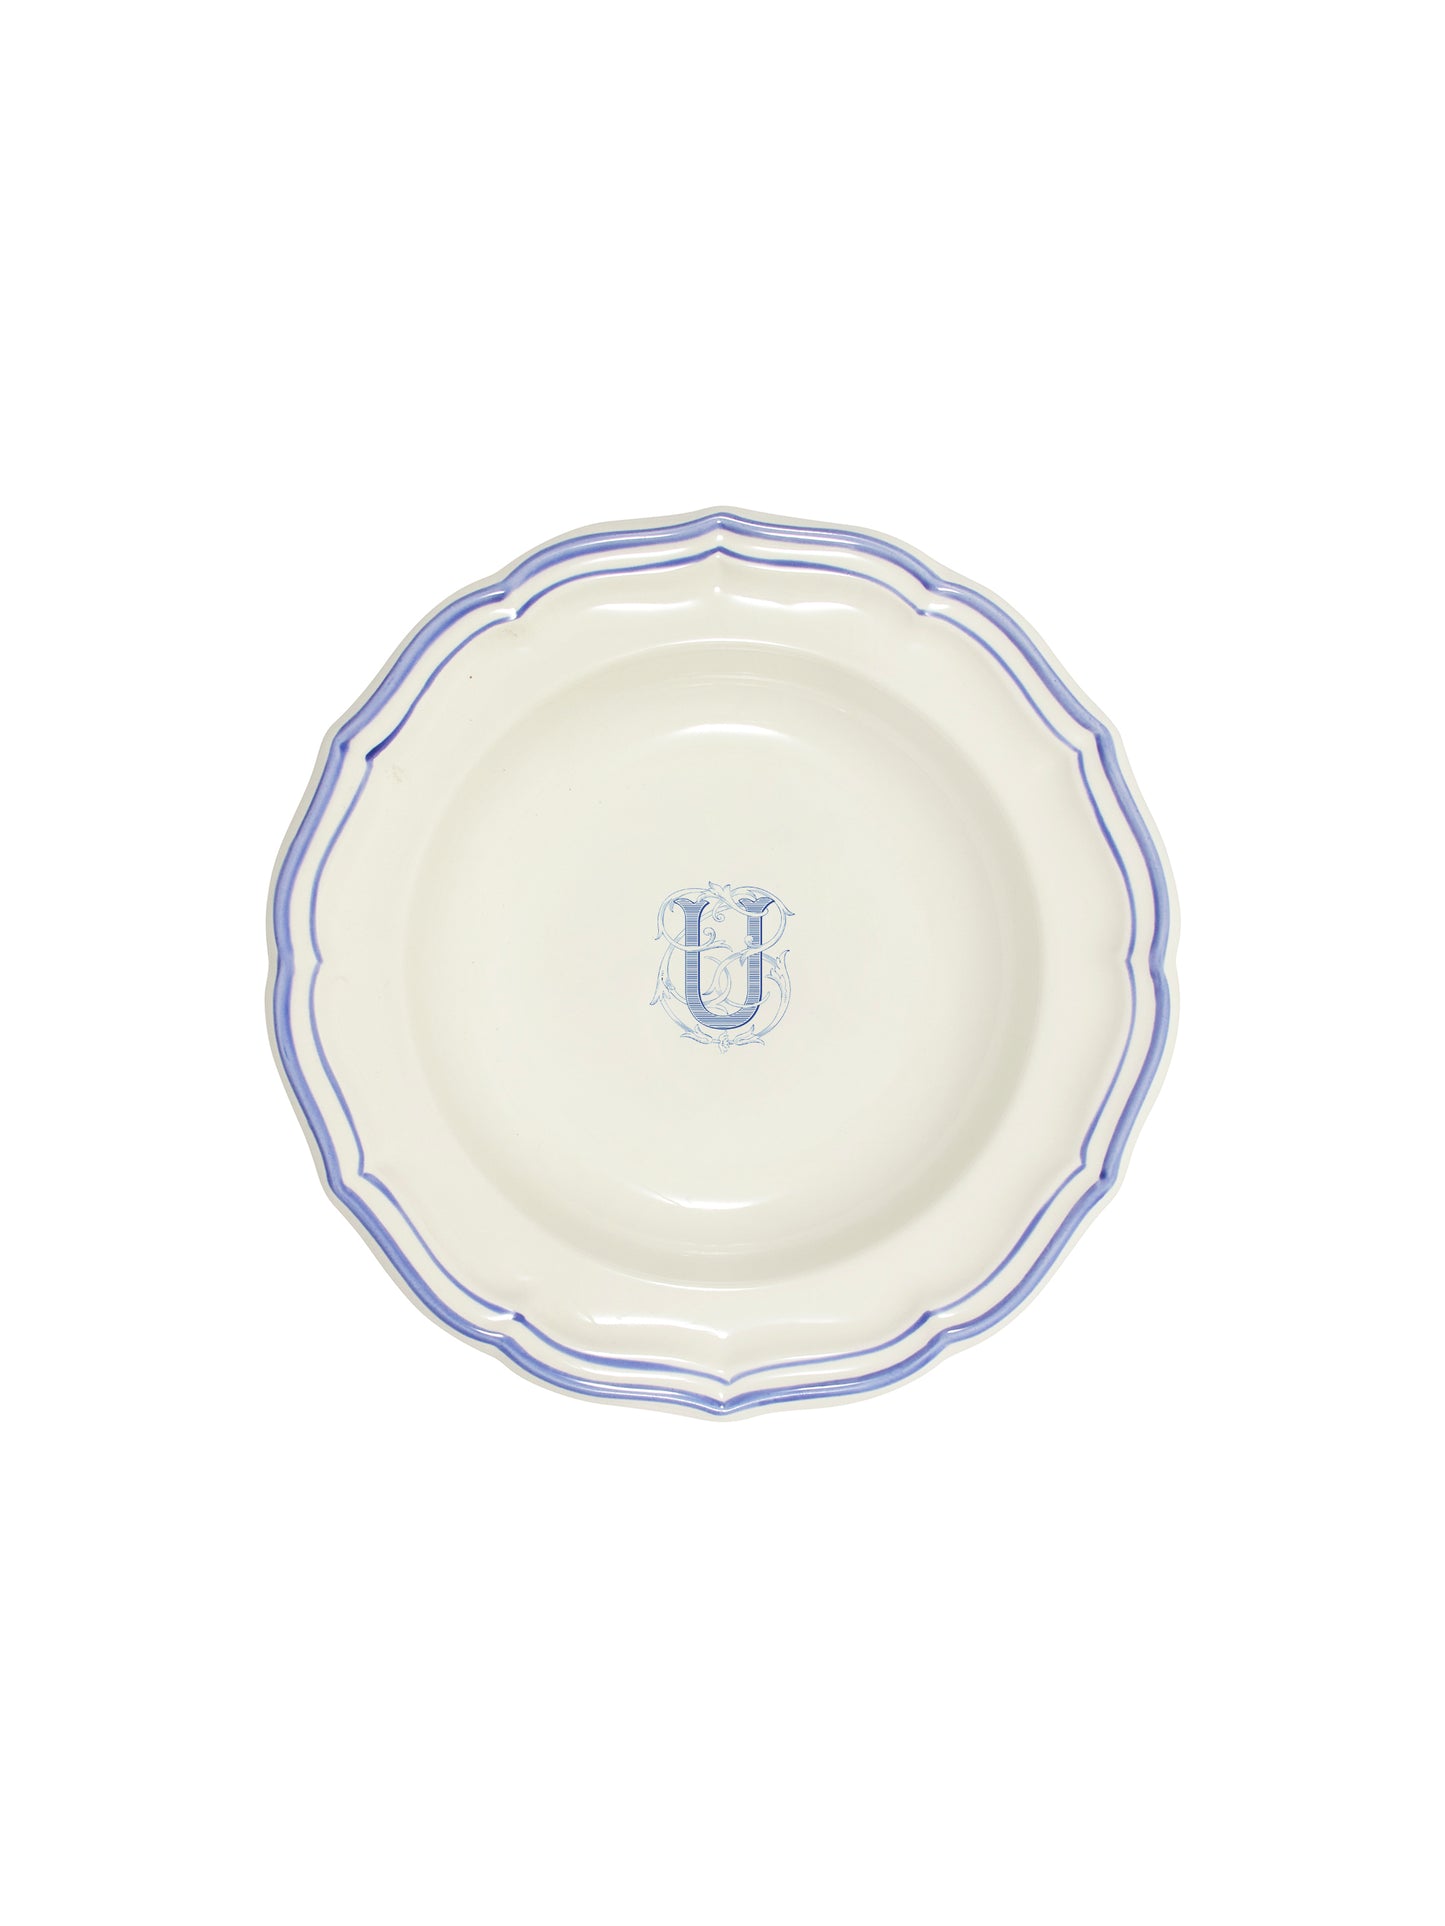 Gien Filet Bleu Monogram Soup Plate U Weston Table